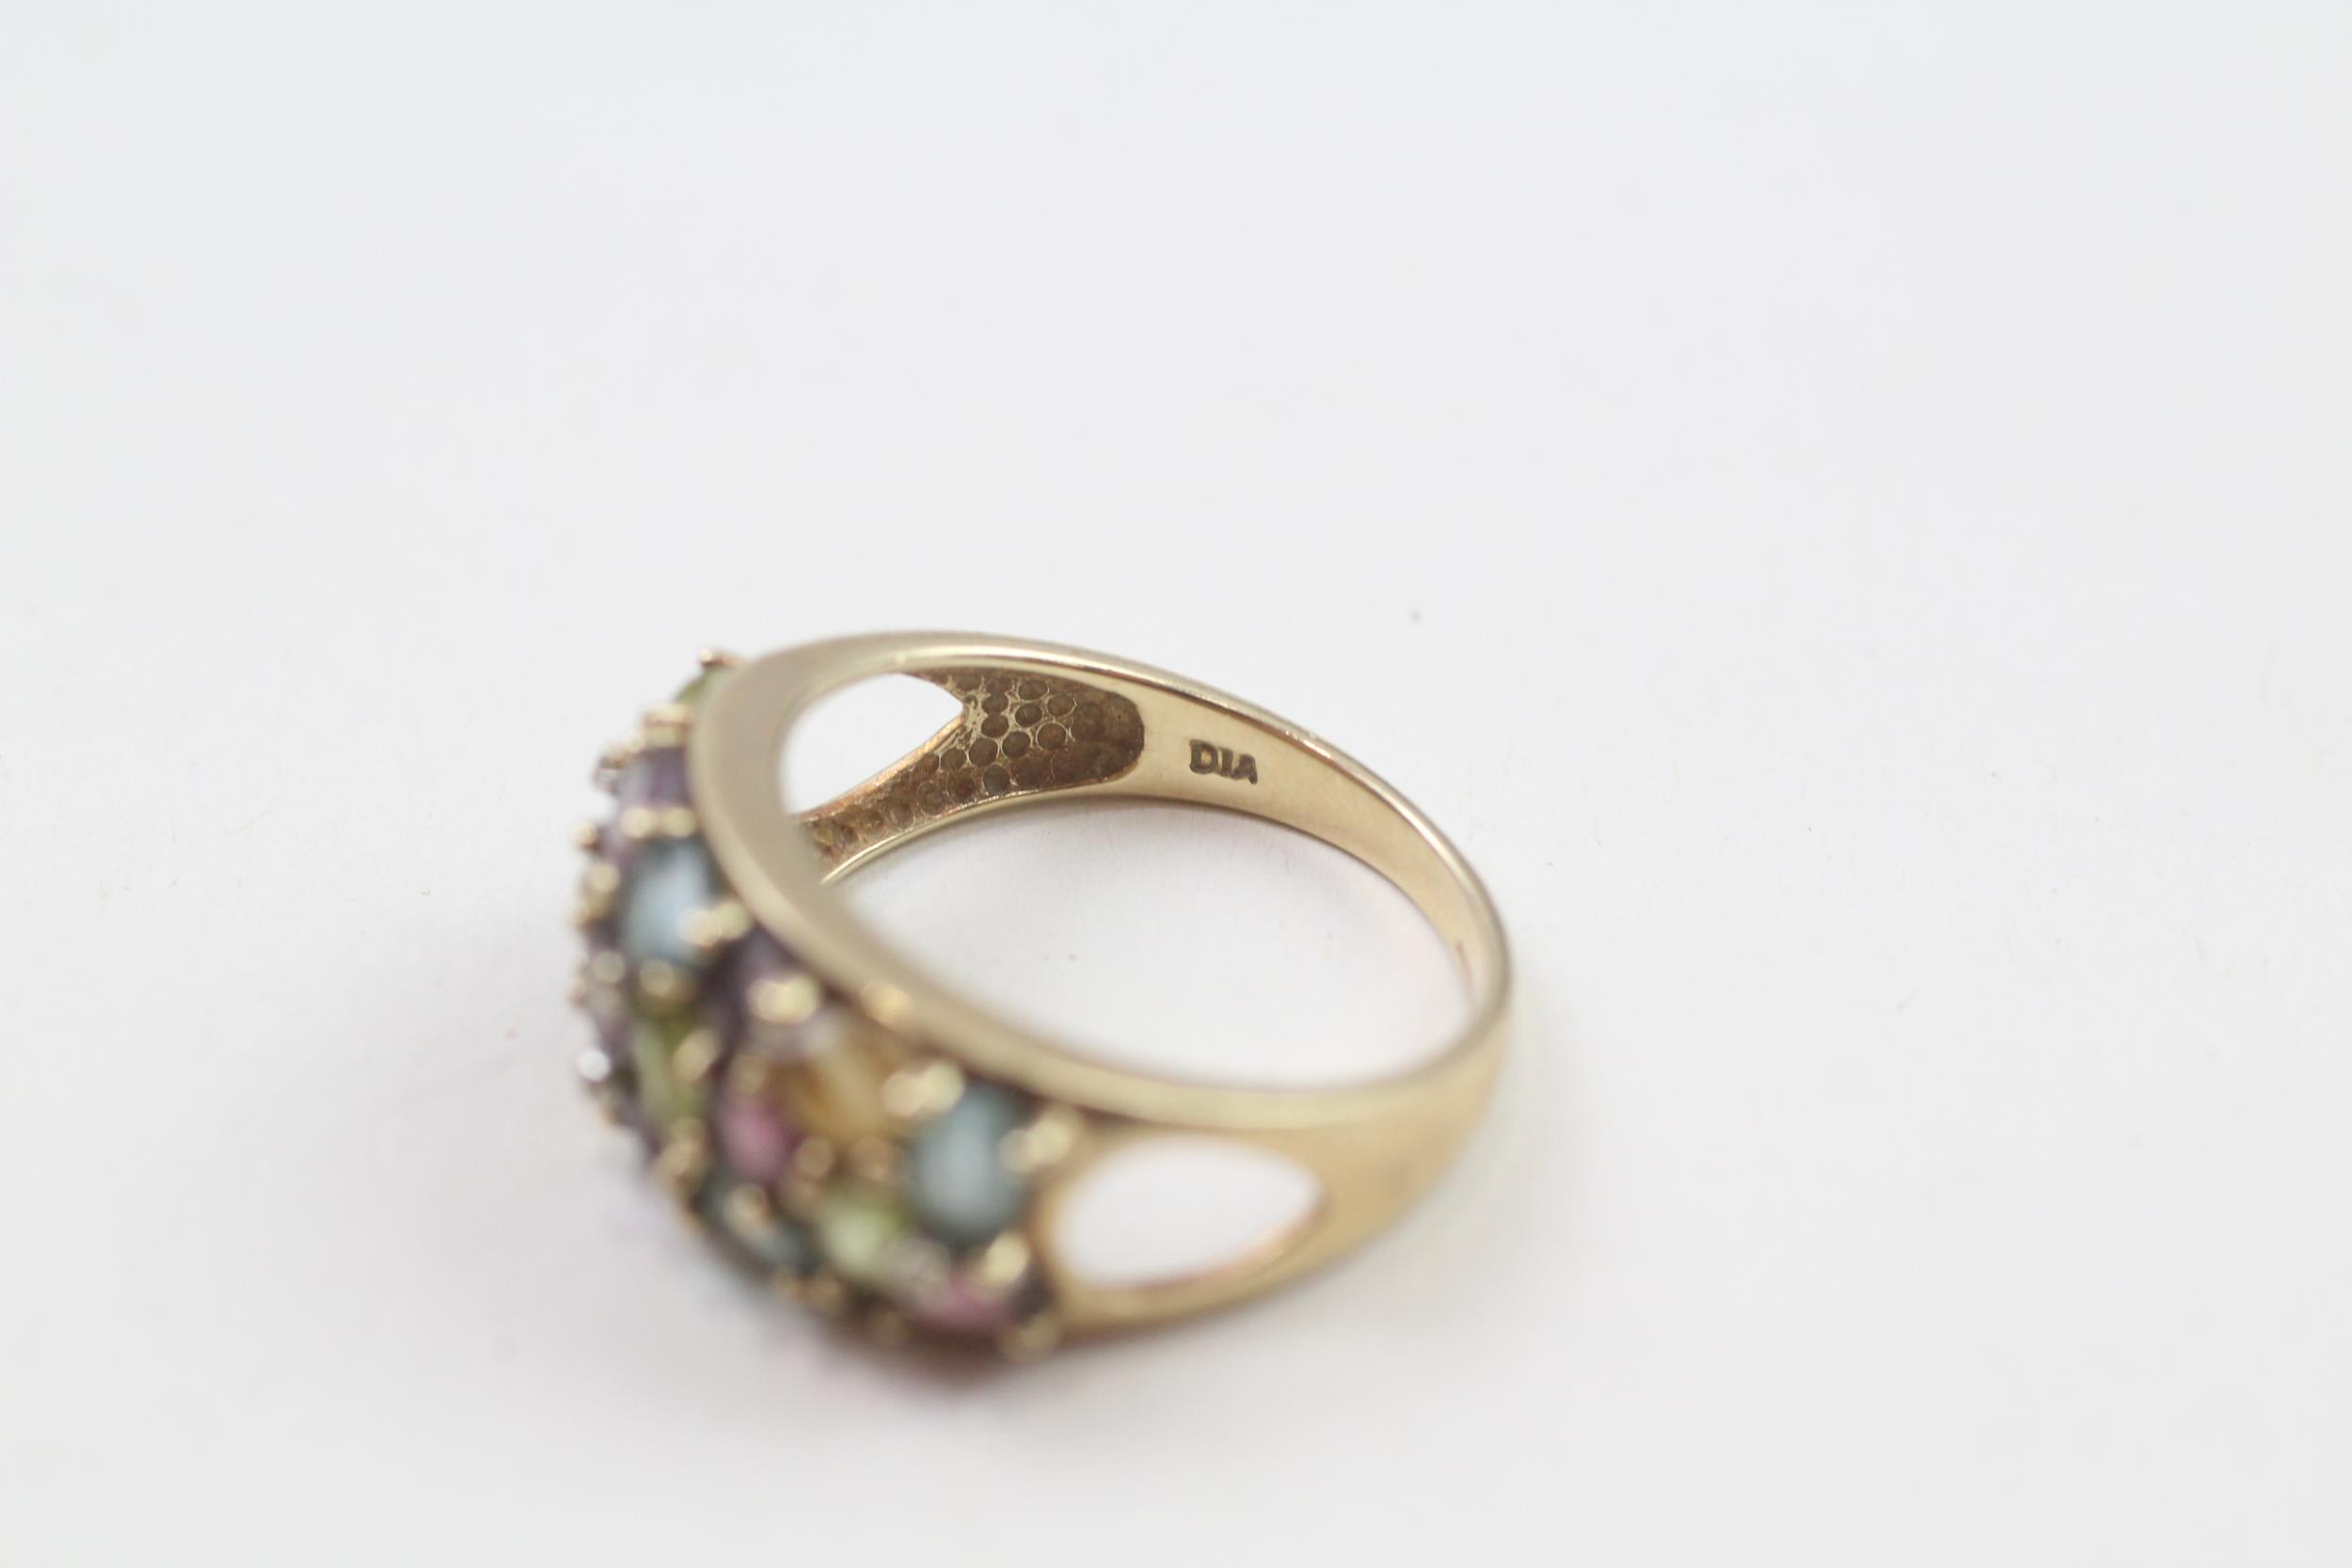 9ct gold multi-gemstone dress ring, gemstones including: amethyst, peridot, citrine, garnet & blue - Image 4 of 4